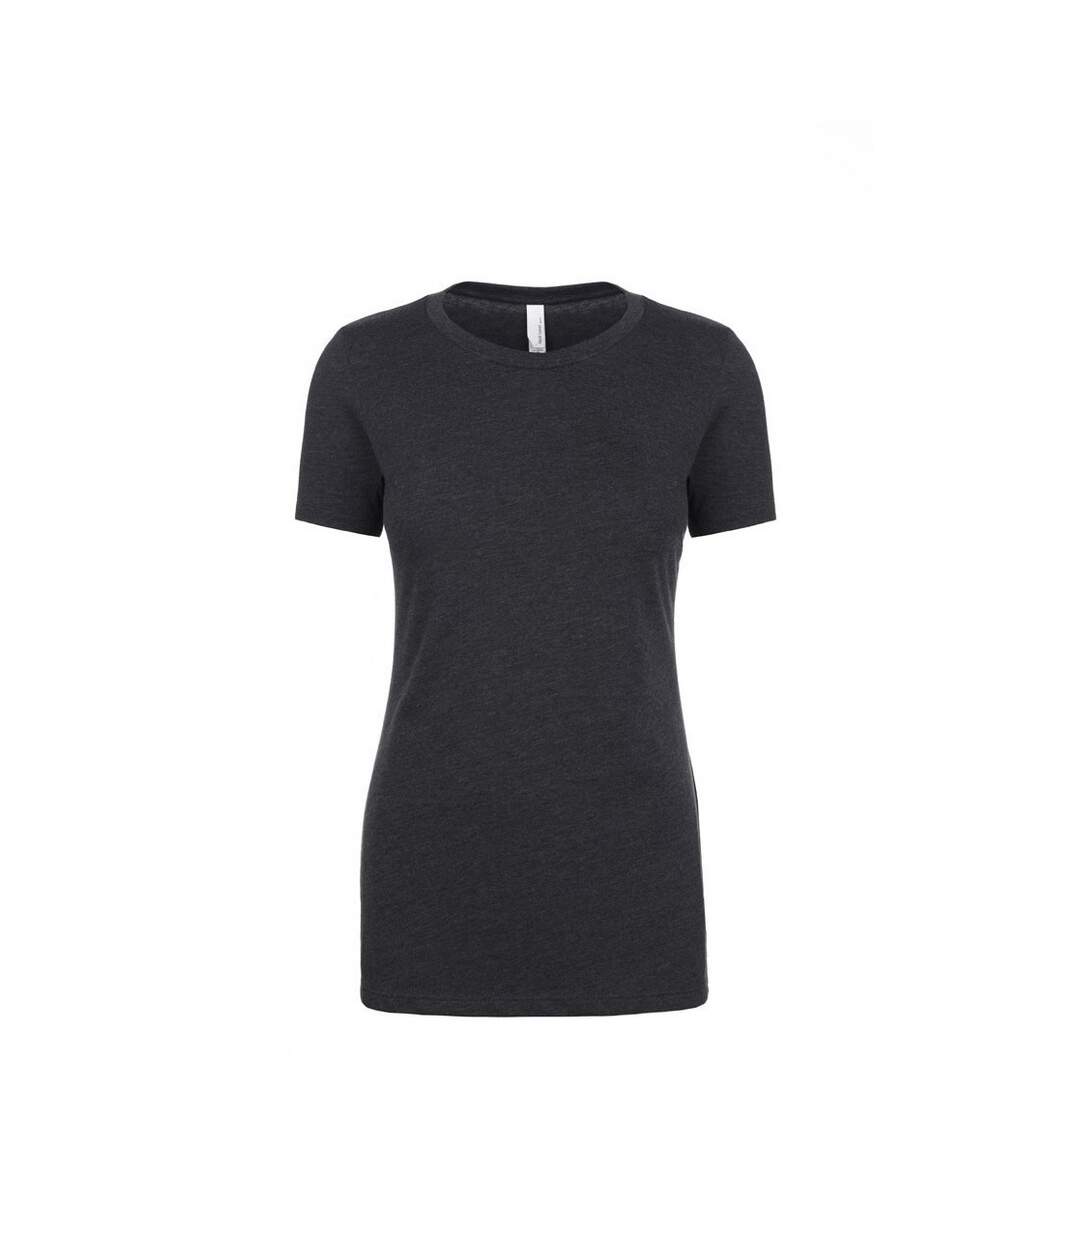 Next Level - T-Shirt CVC - Femme (Charbon) - UTPC3467